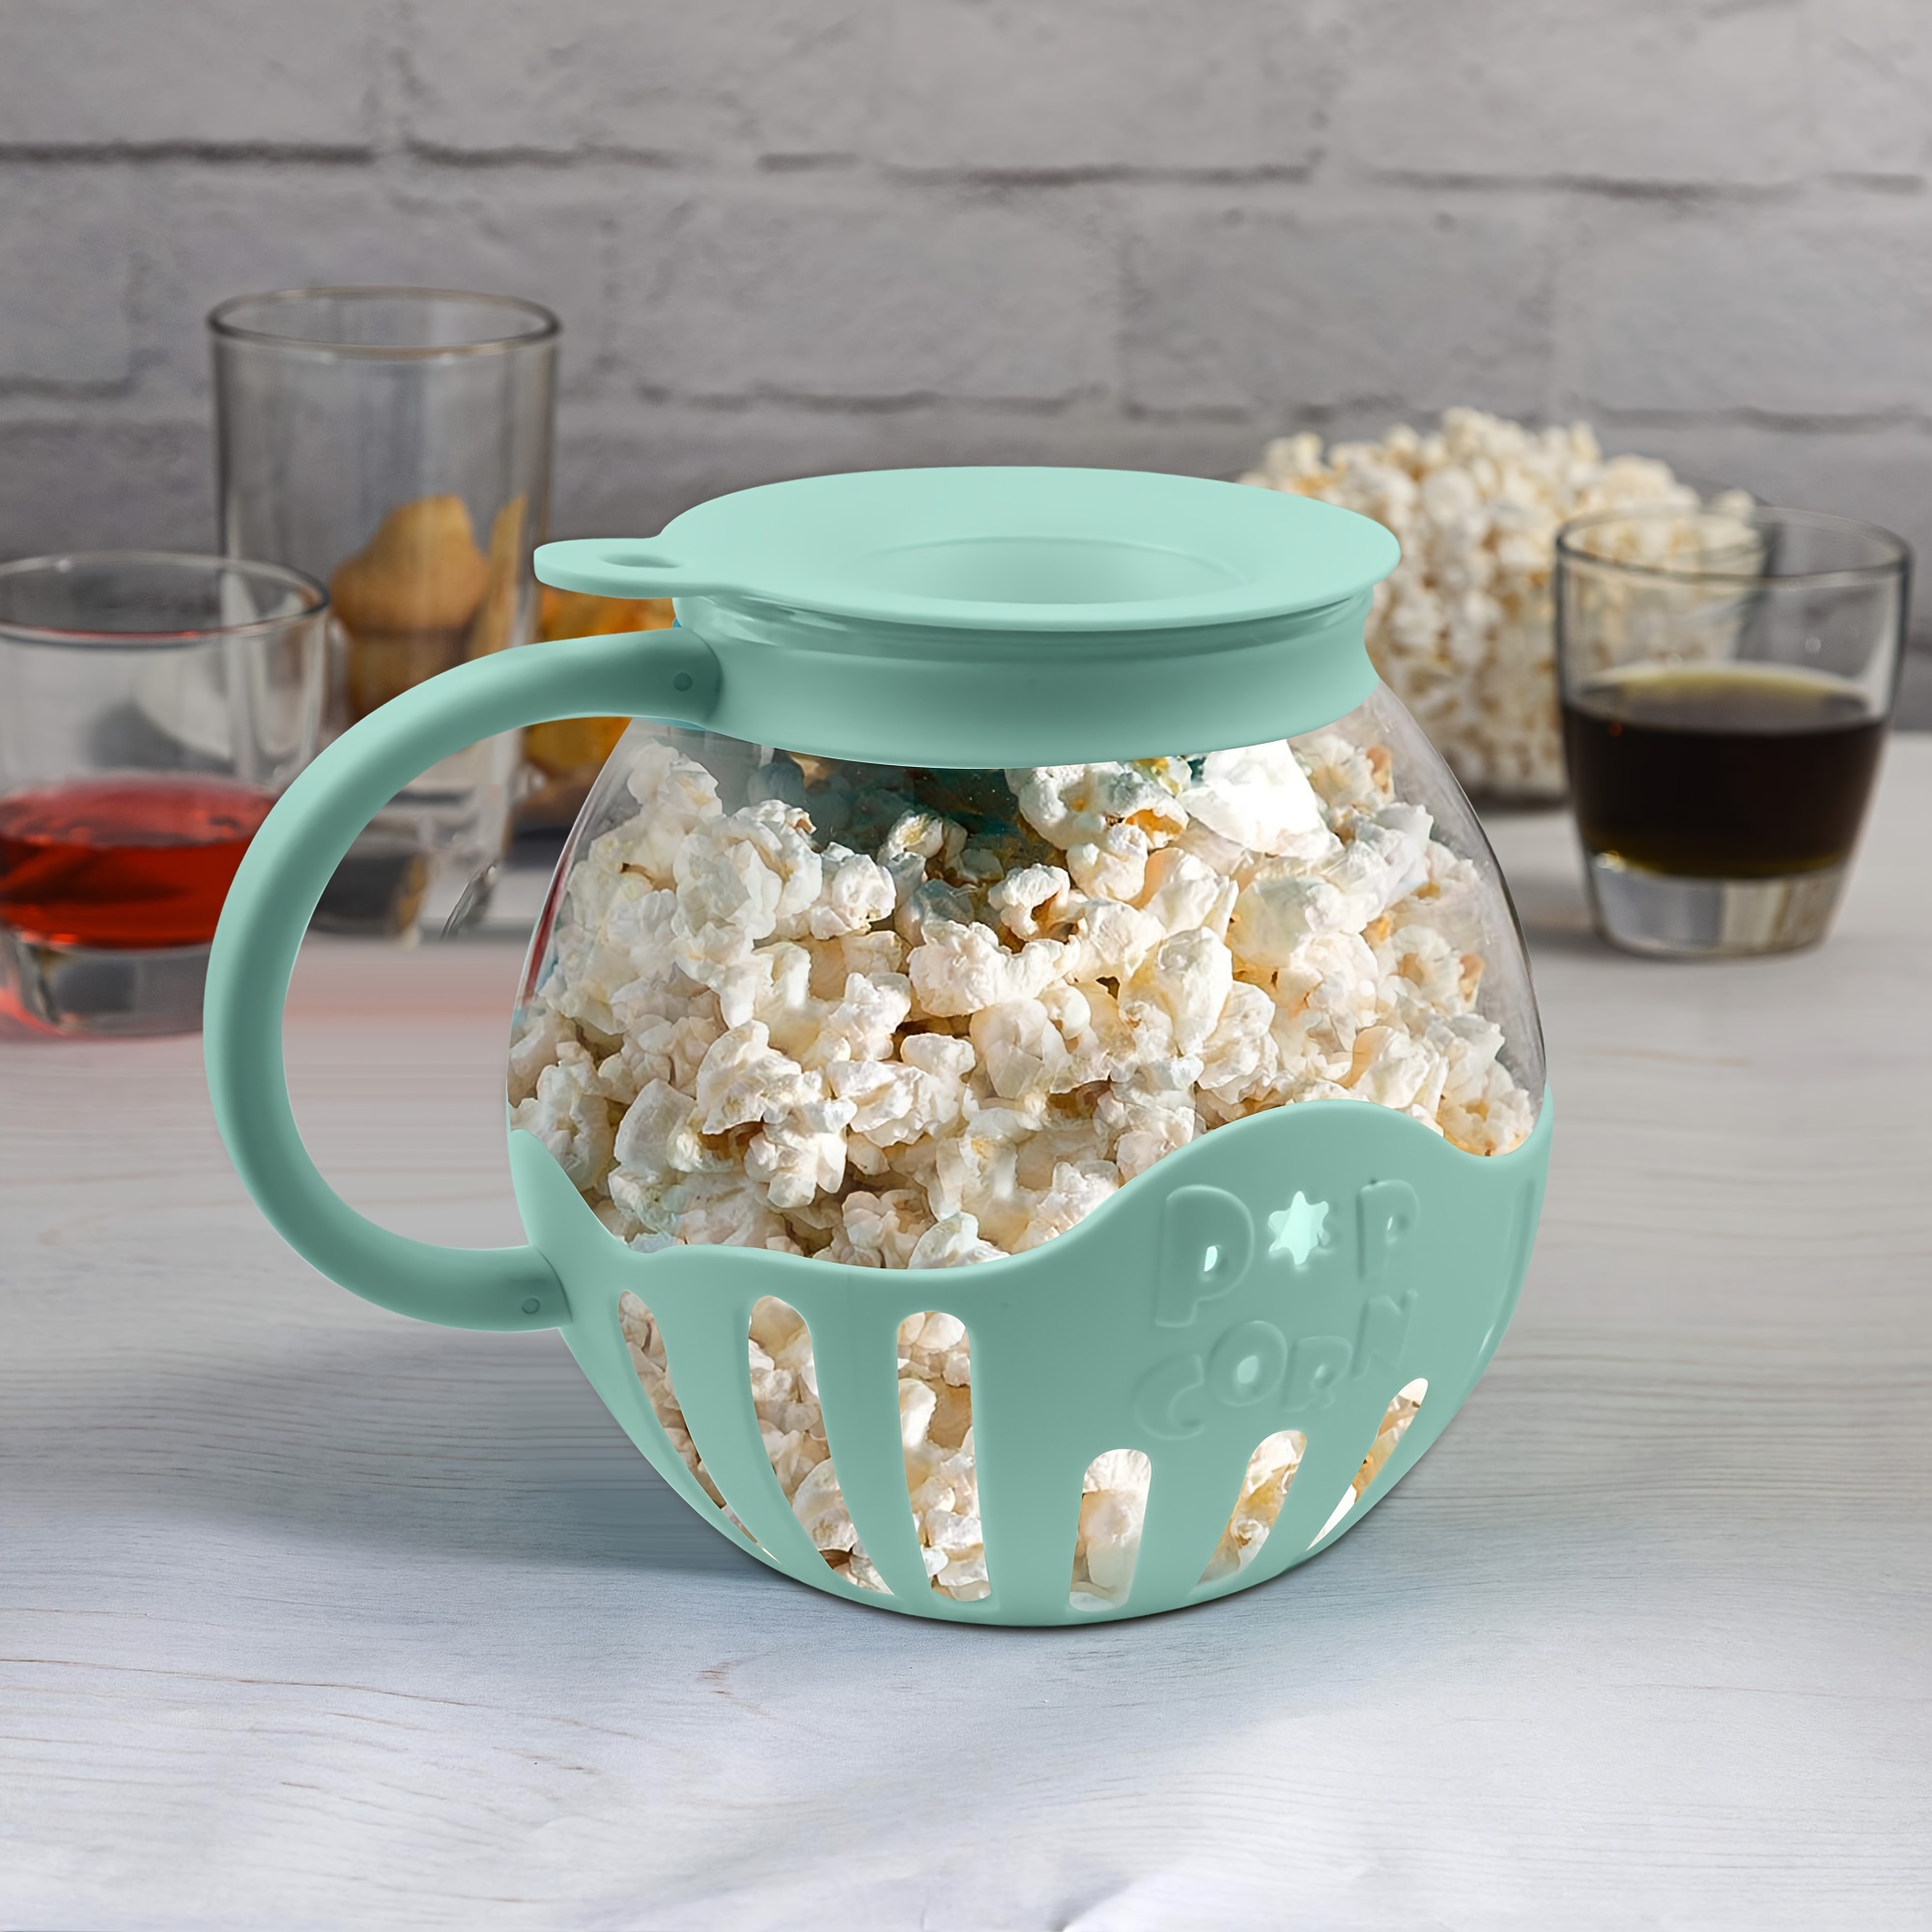 Popcorn Popper Ecolution Micro-pop Popcorn Popper Your Choice